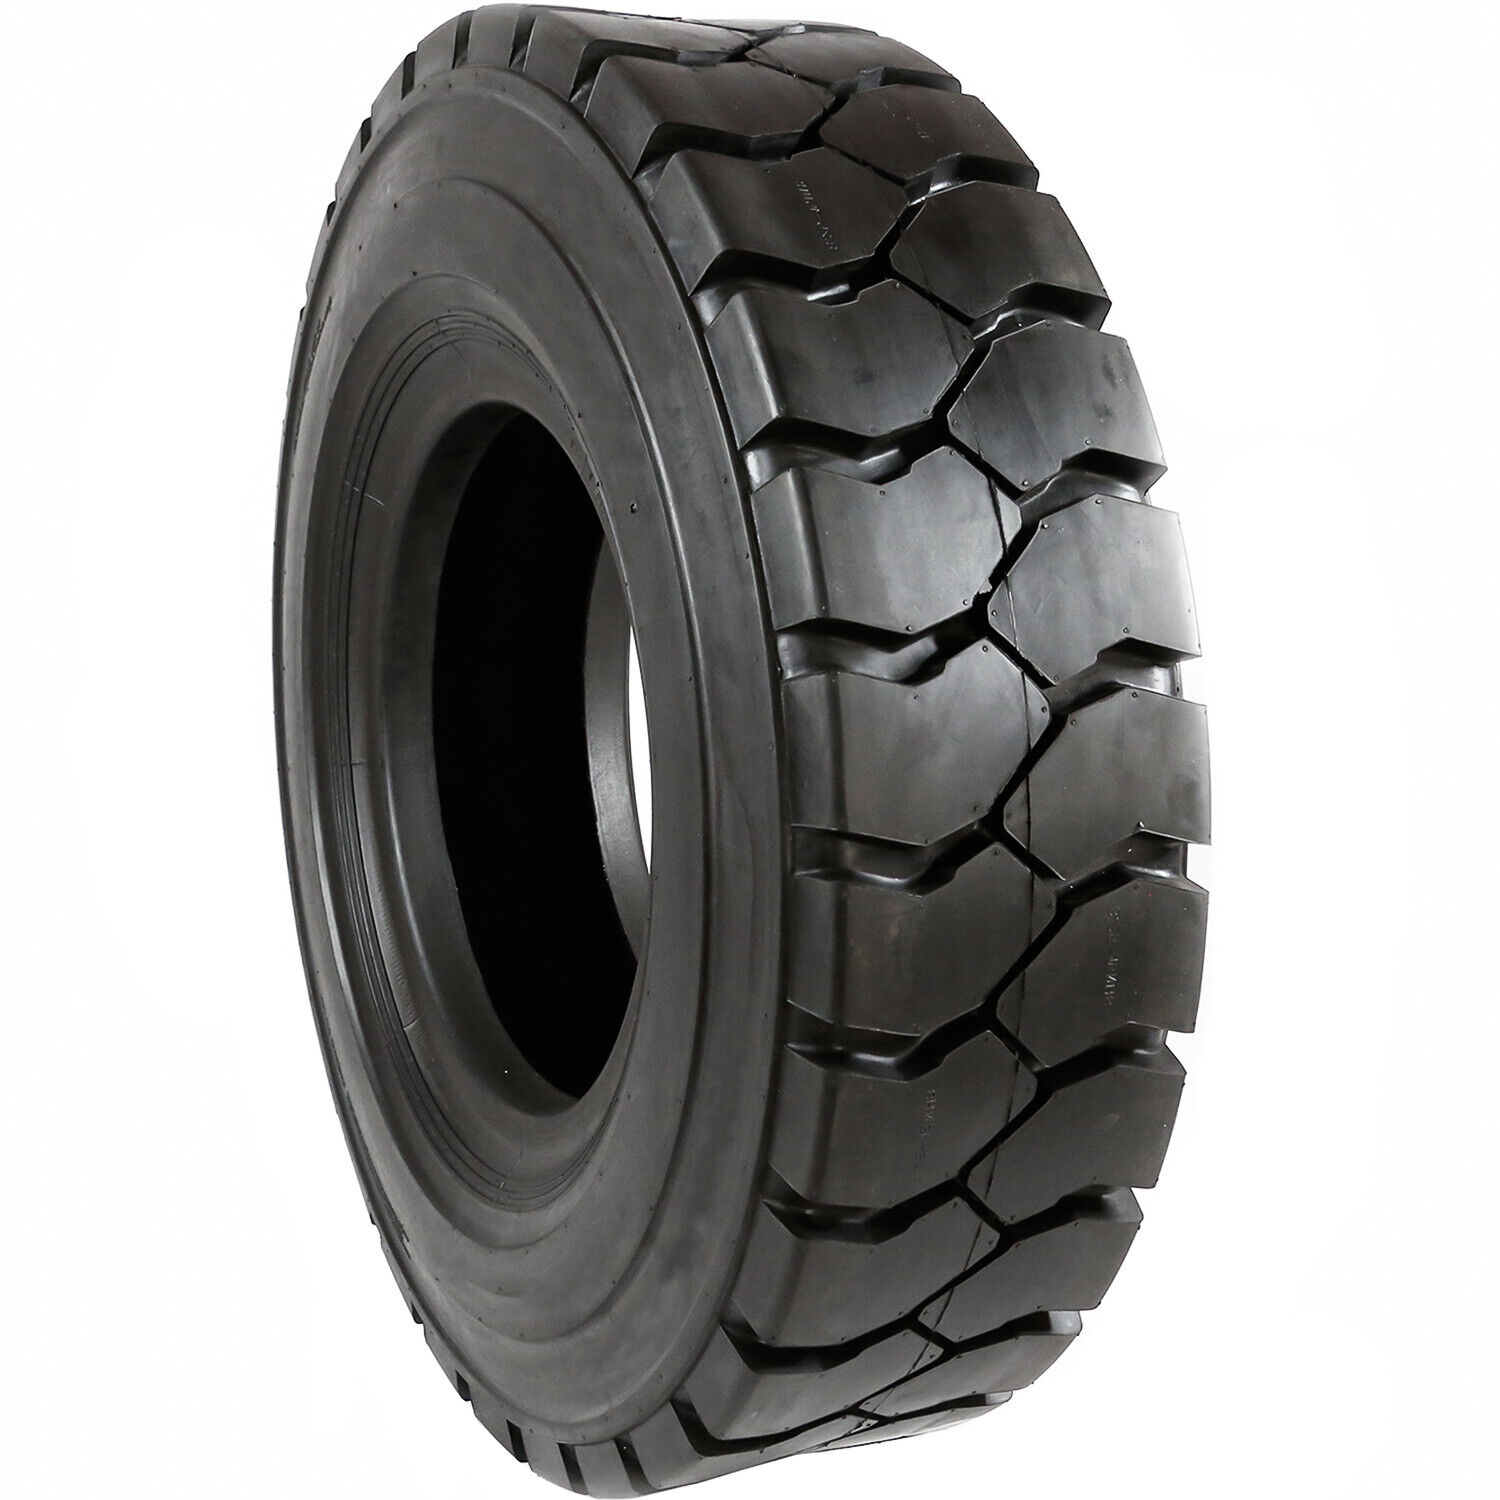 Tire Maxdura 5275 6.00-9 Load 10 Ply (TT) Industrial